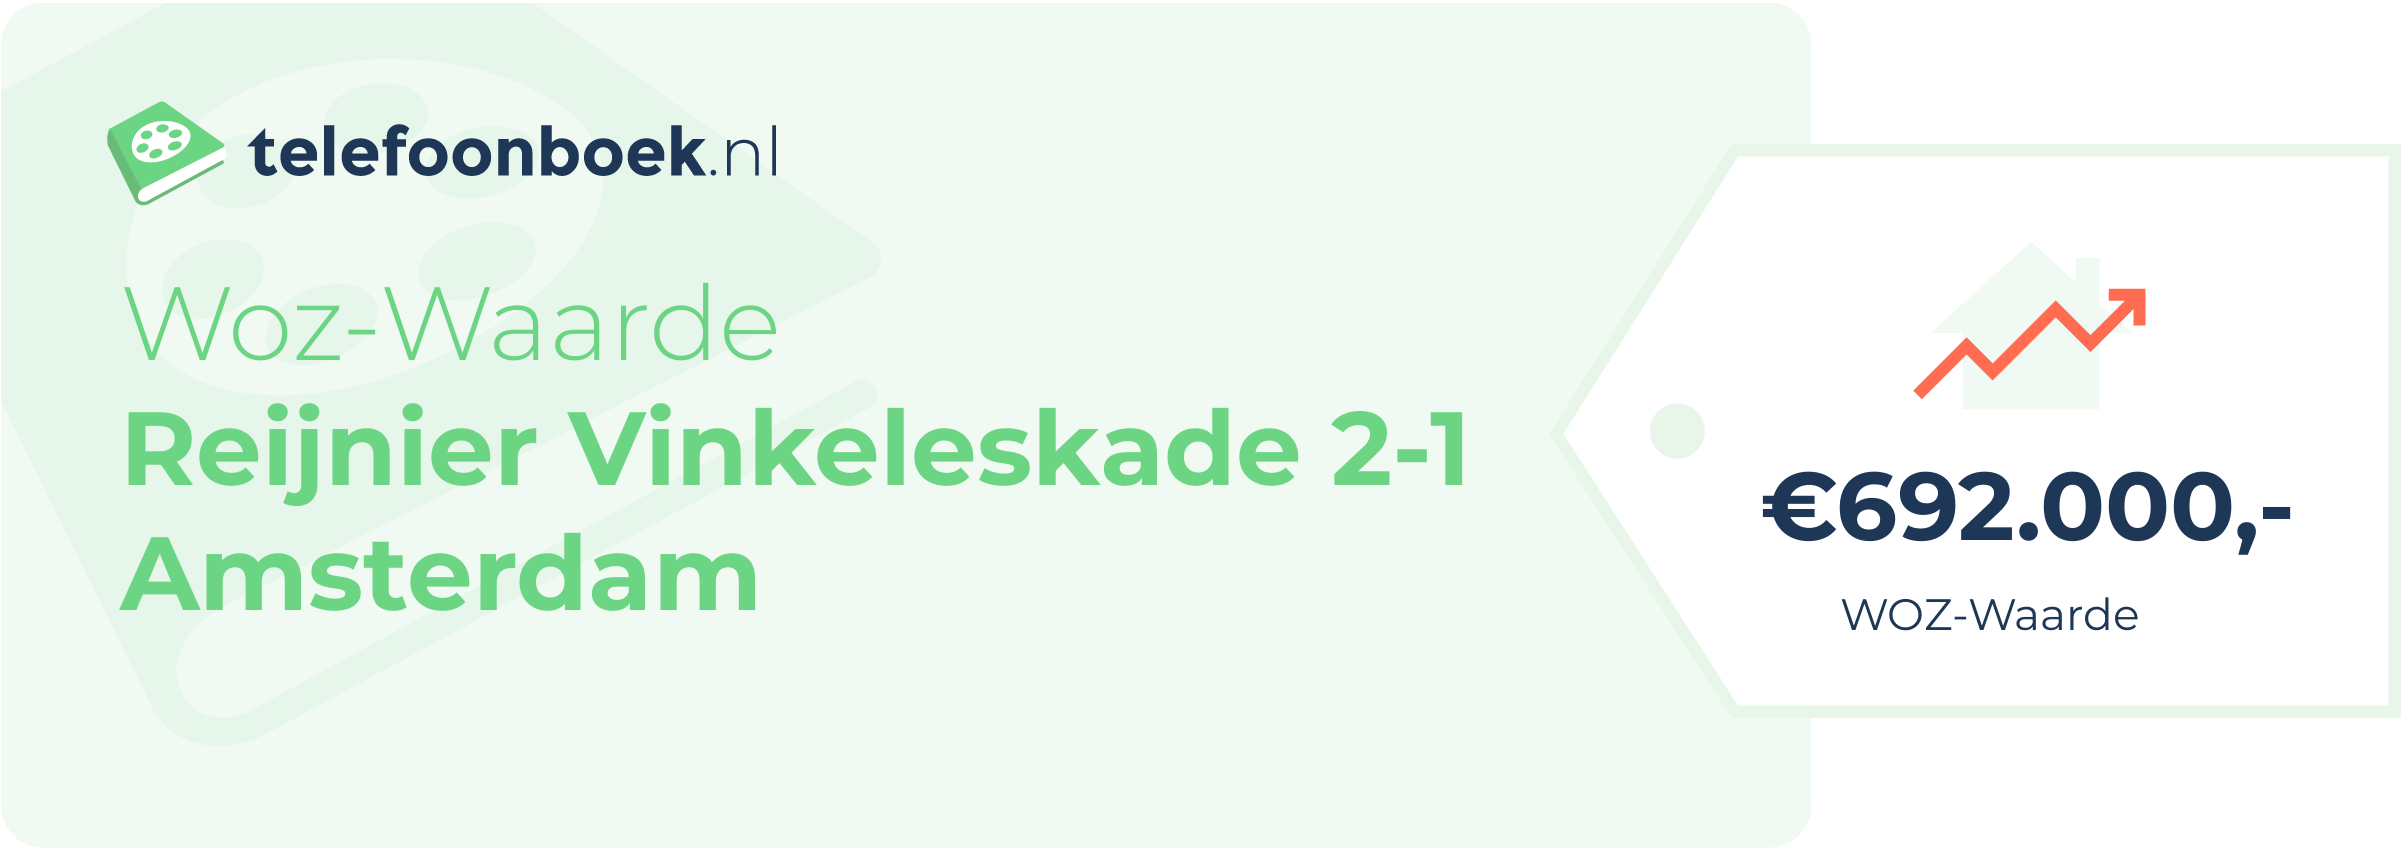 WOZ-waarde Reijnier Vinkeleskade 2-1 Amsterdam